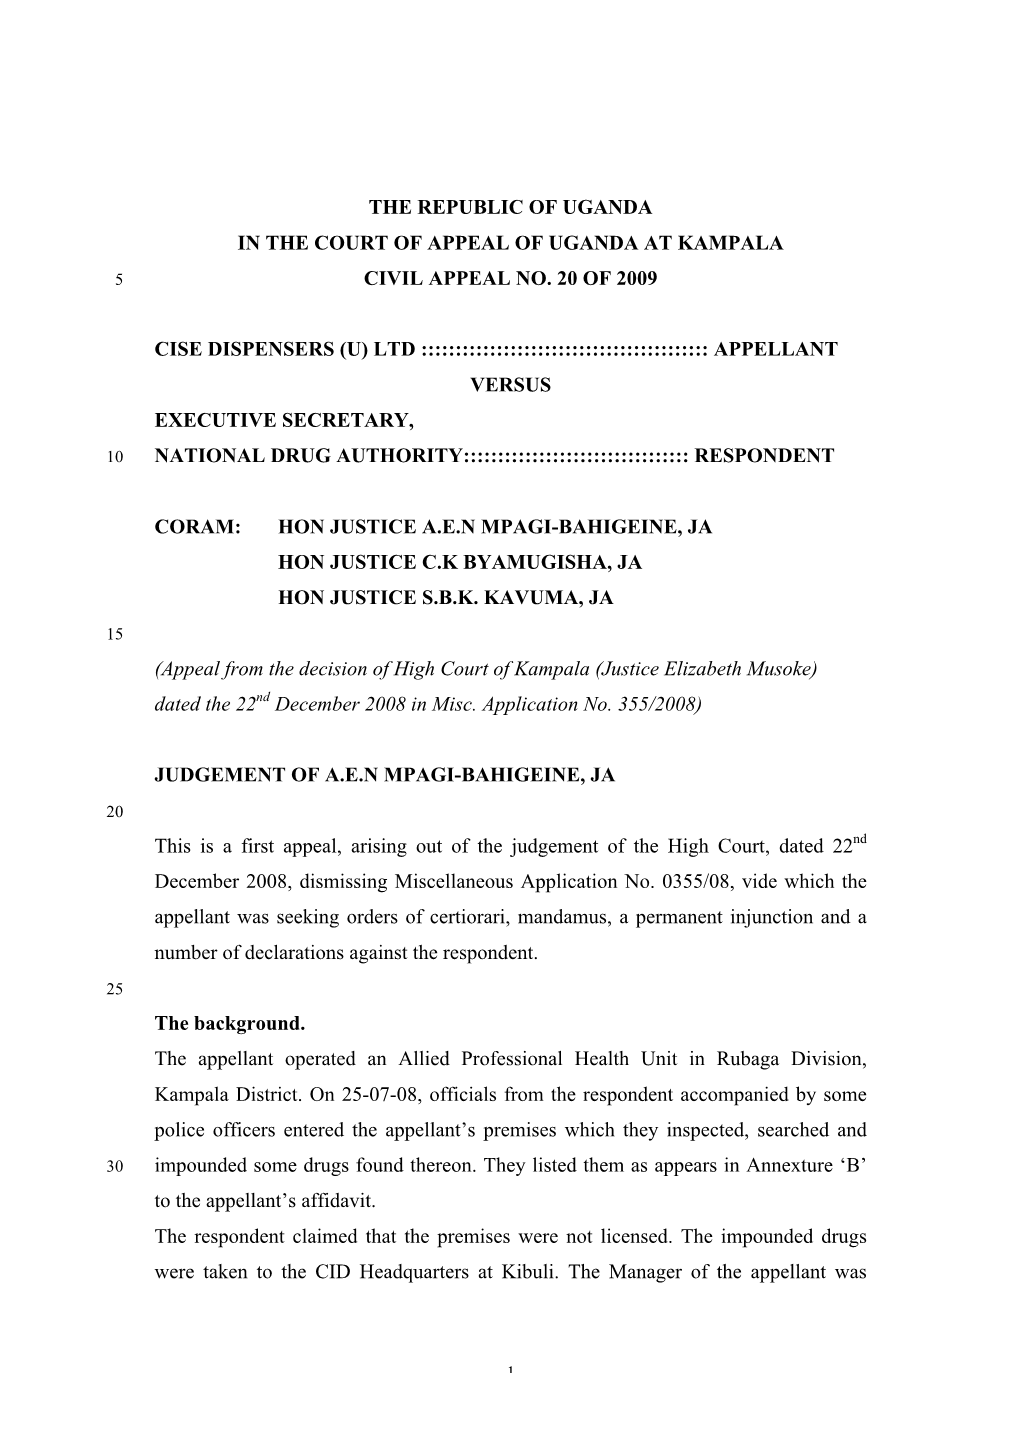 The Republic of Uganda in the Court of Appeal of Uganda at Kampala Civil Appeal No. 20 of 2009 Cise Dispensers (U) Ltd